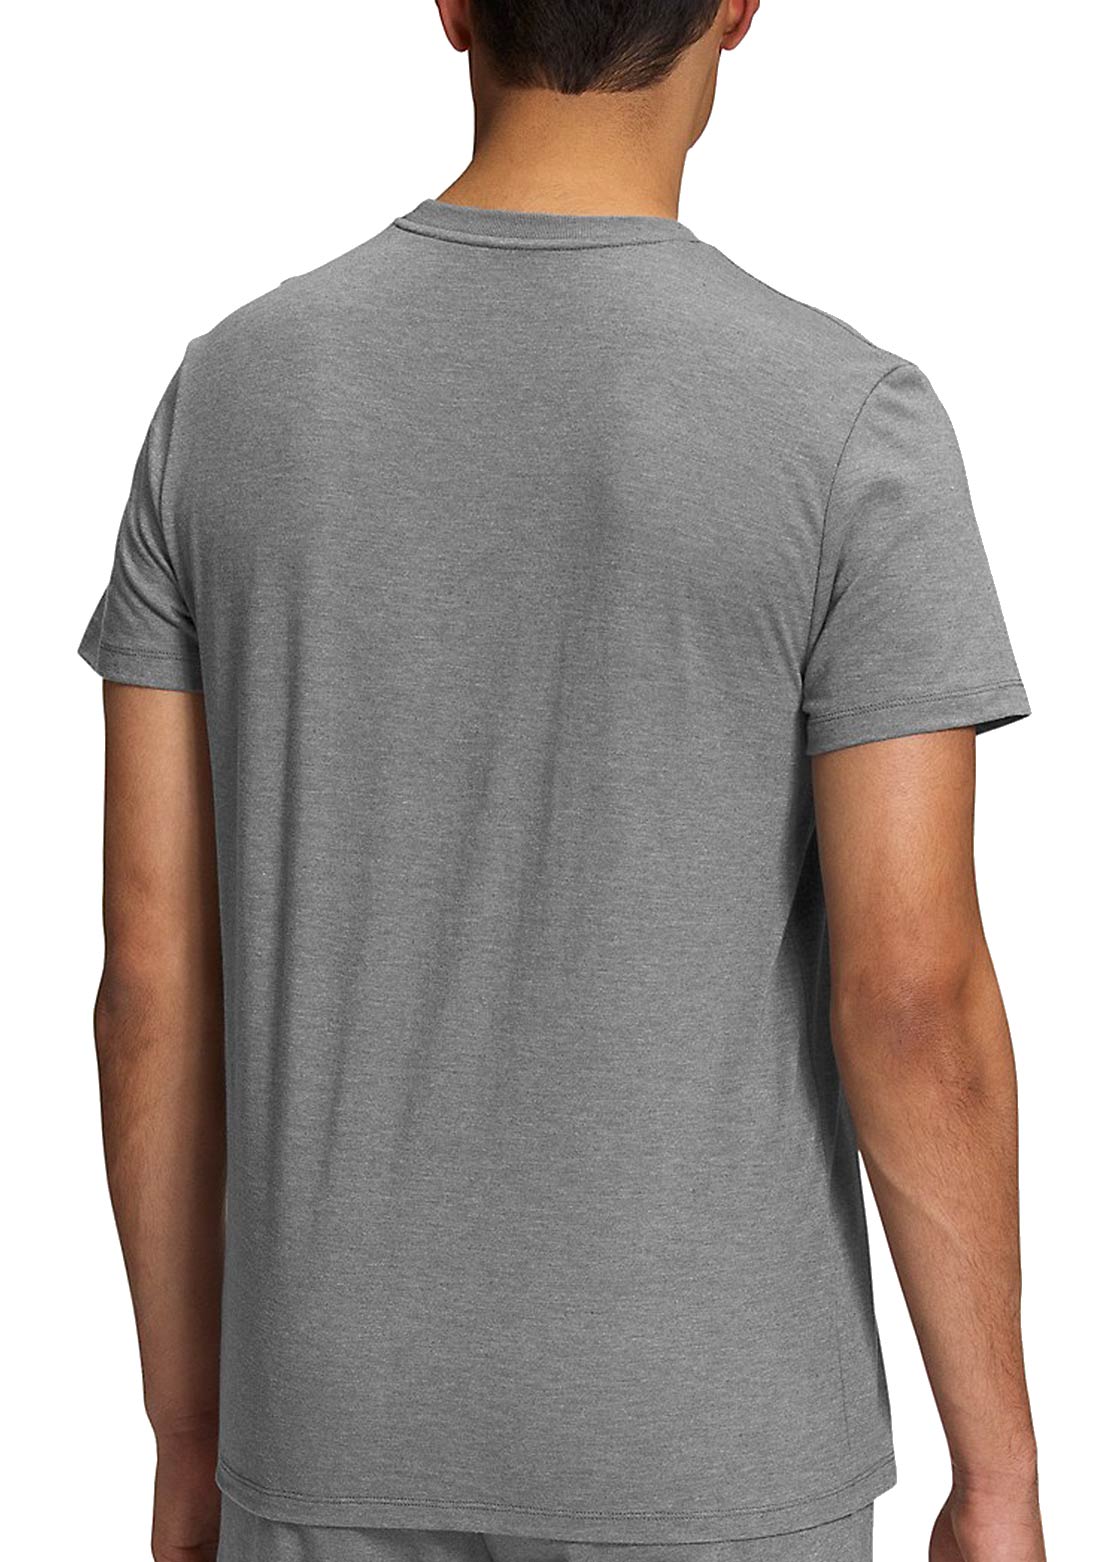 The North Face Men's Half Dome Tri-Blend T-Shirt - PRFO Sports